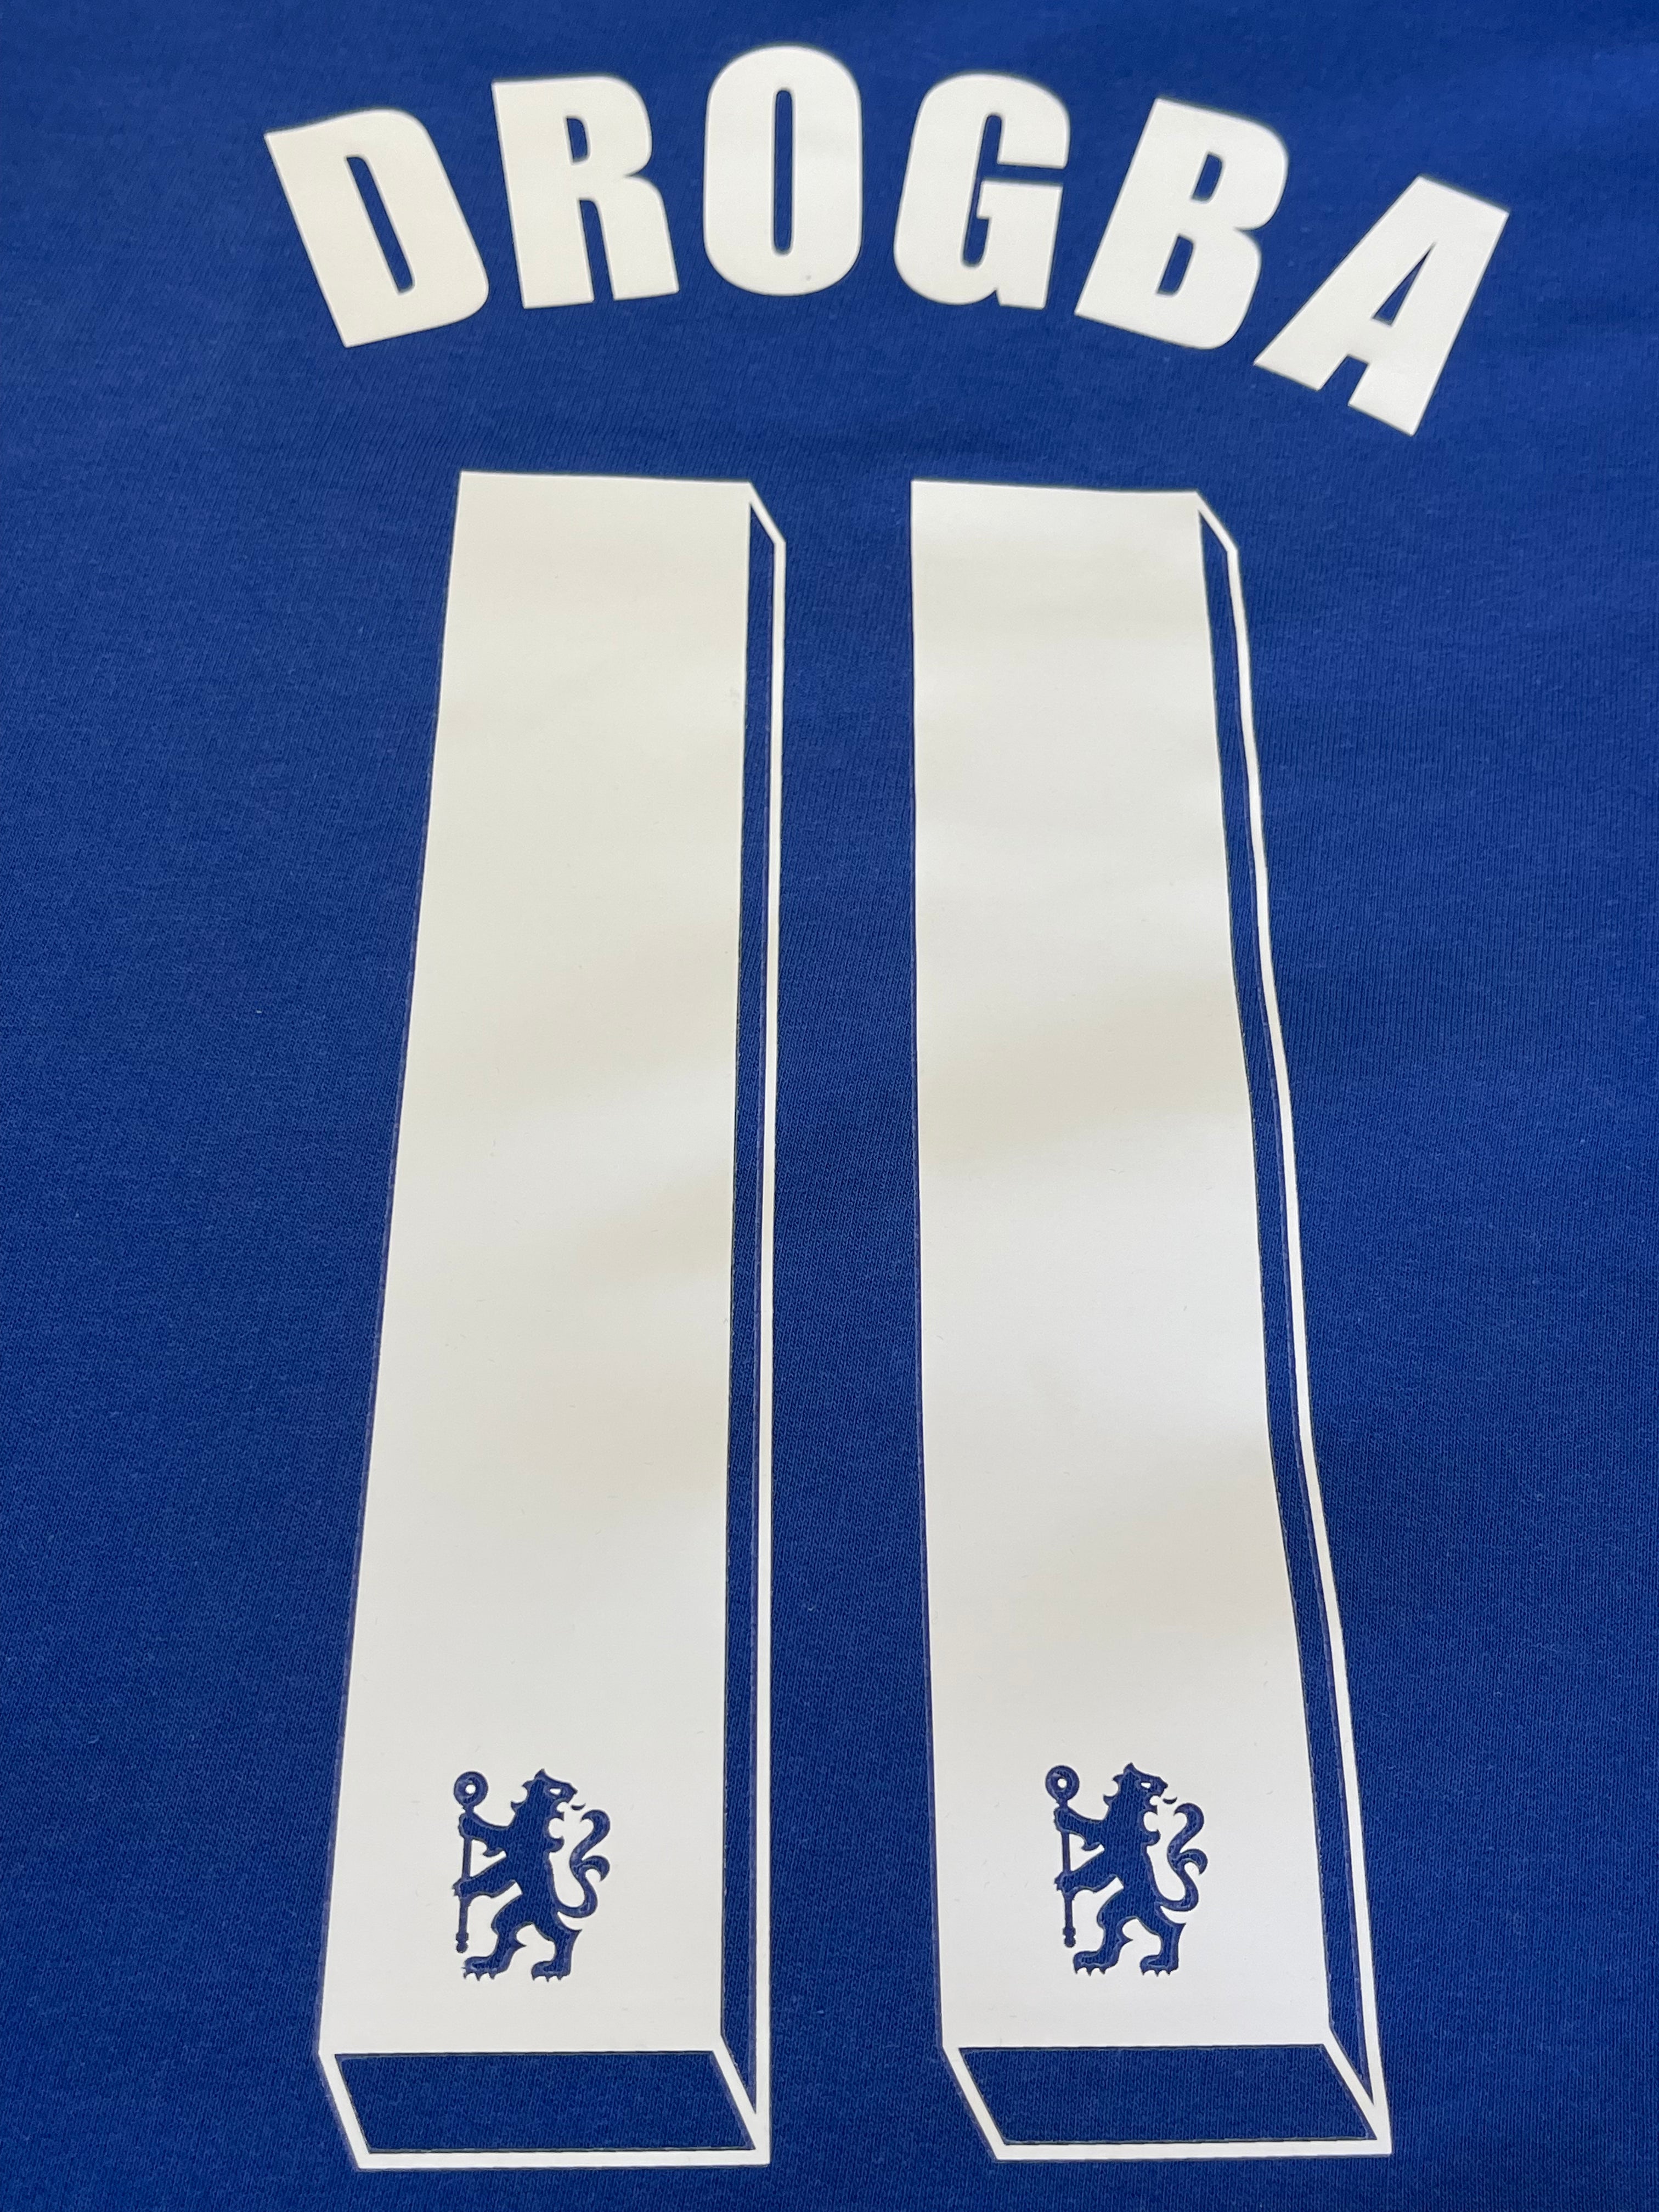 Sweat - Drogba #11 - Chelsea